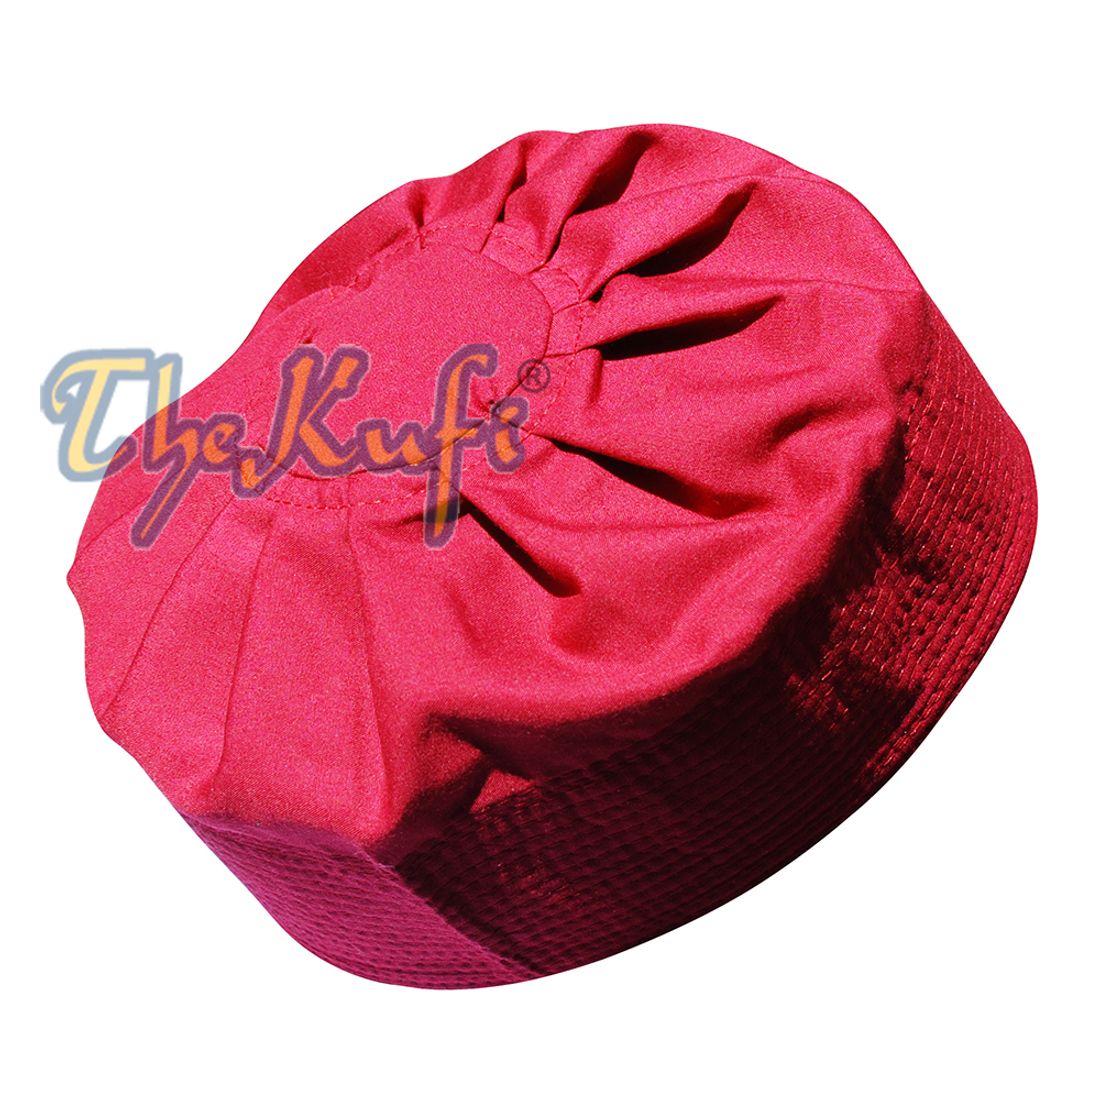 Red Cotton-Blend Pleated Top 9cm Fabrik Kufi Solat Cap Beanie